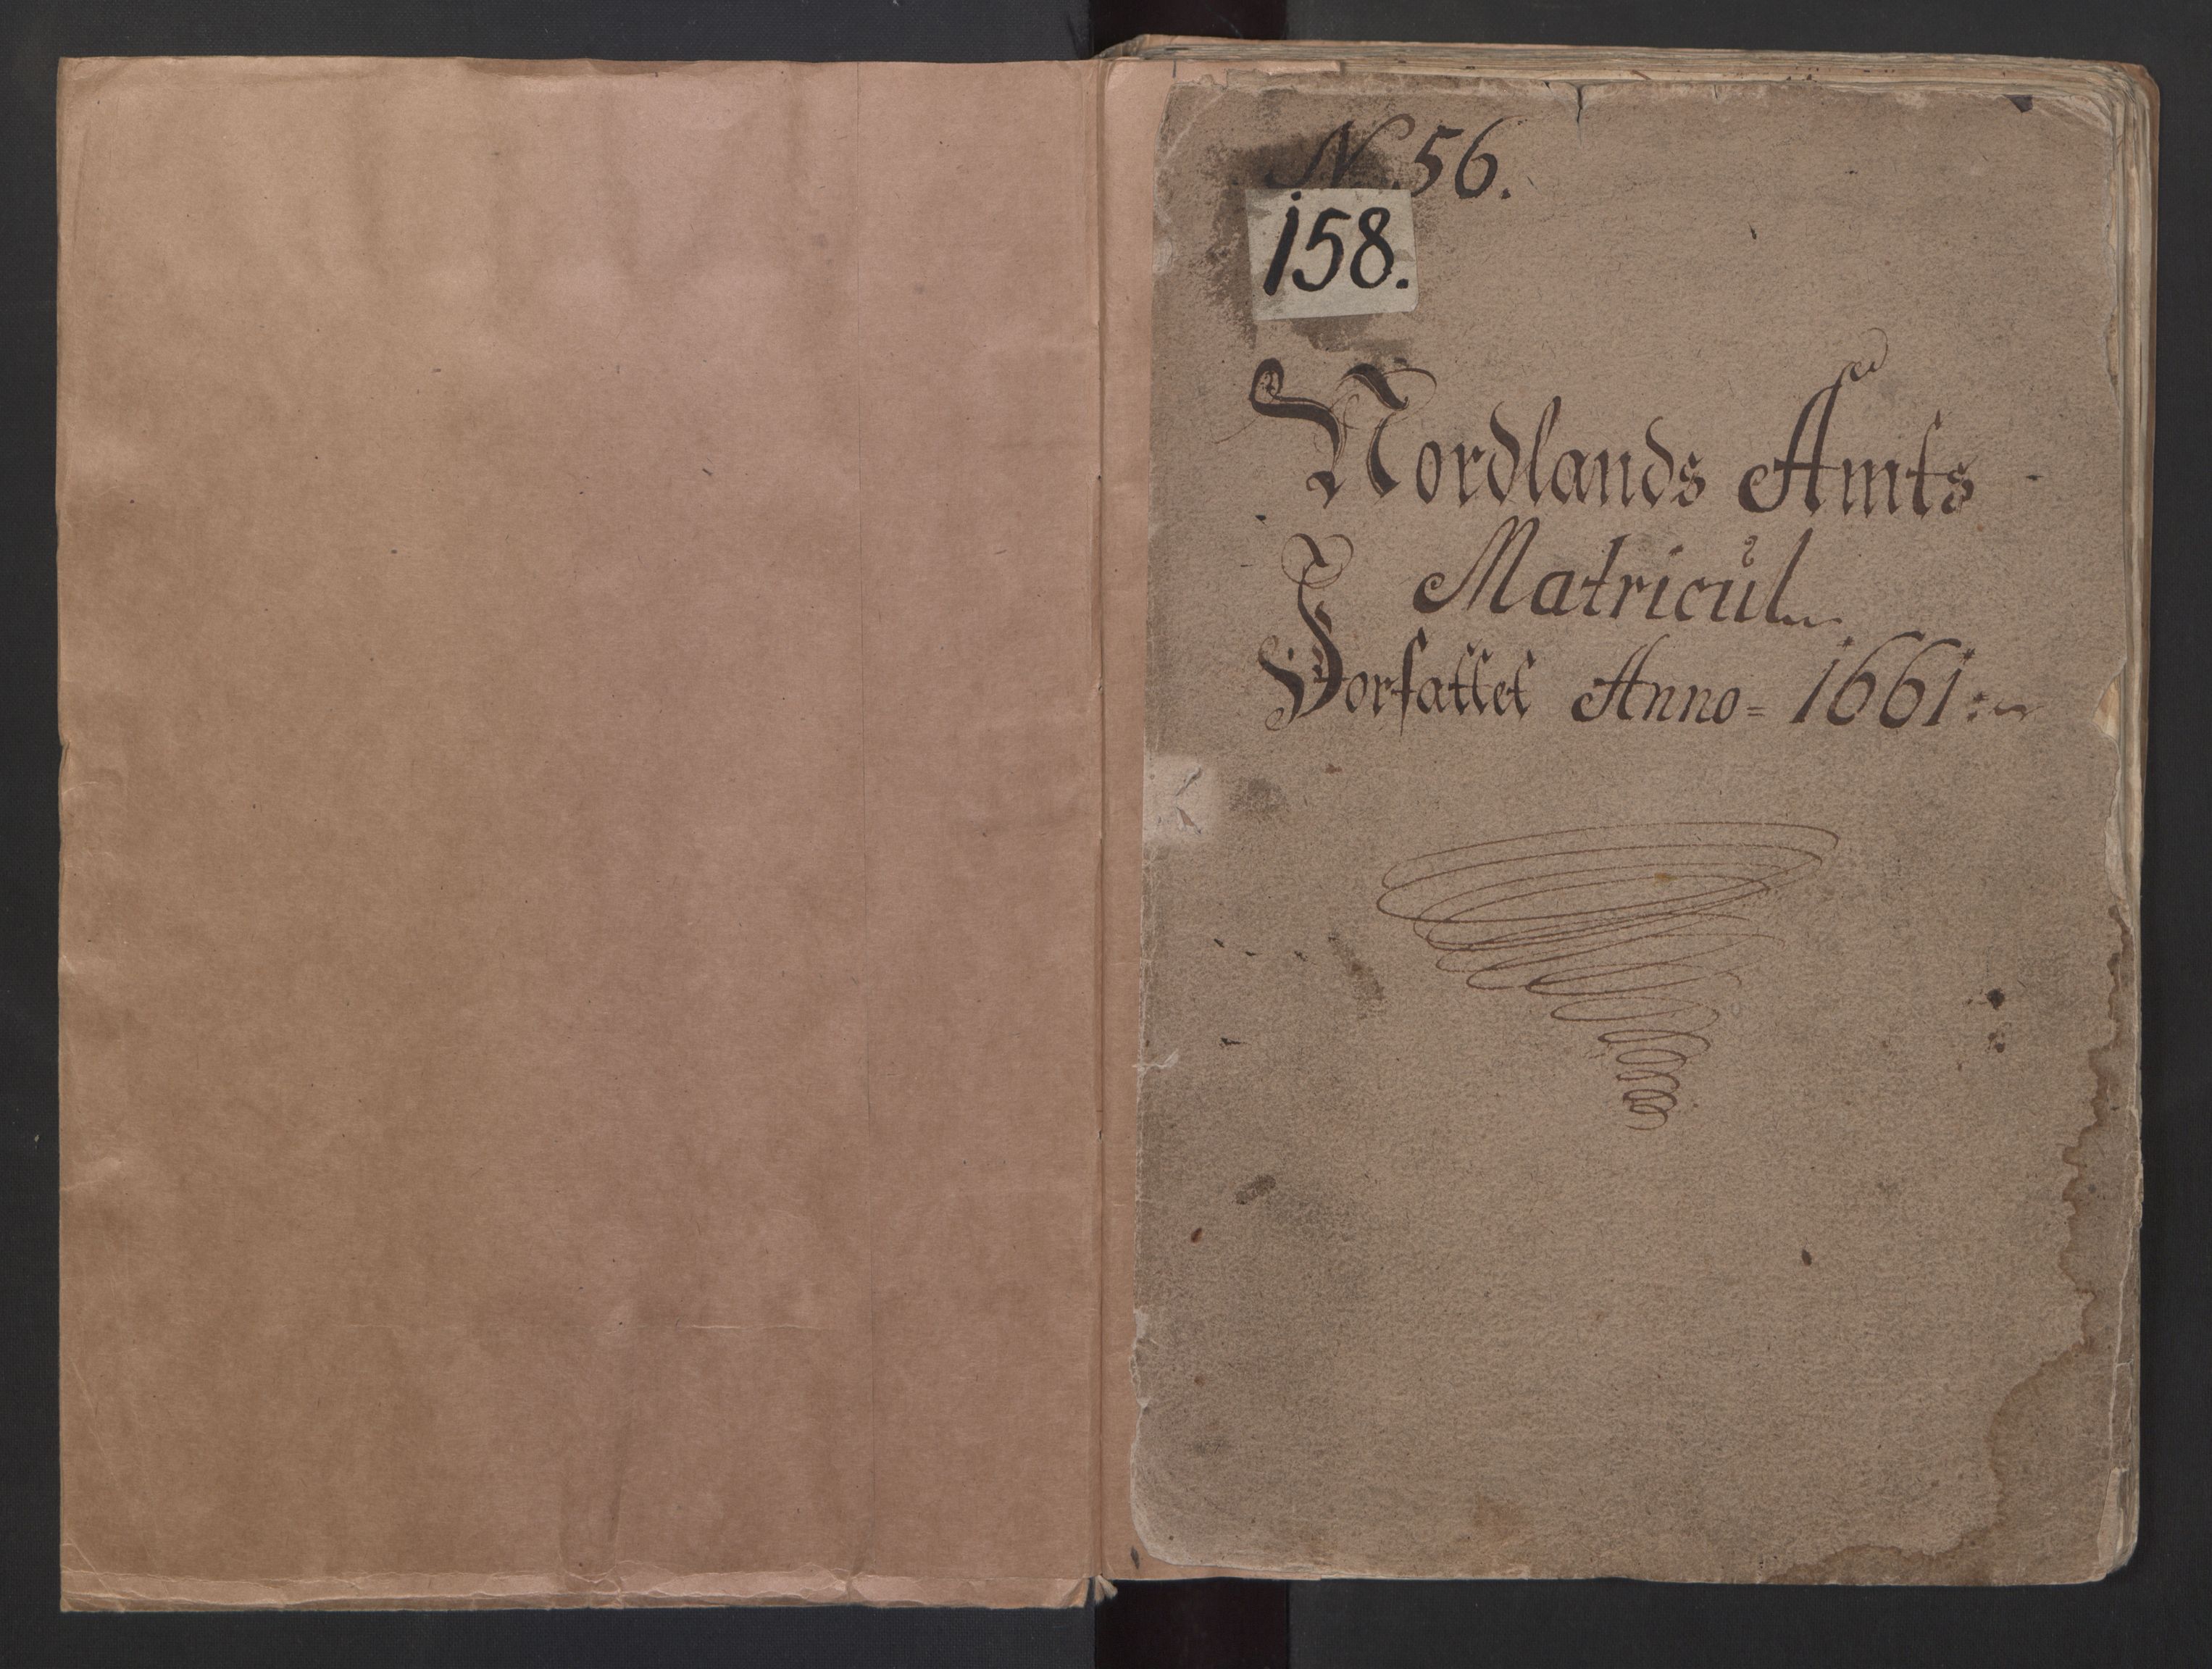 Rentekammeret inntil 1814, Realistisk ordnet avdeling, RA/EA-4070/L/L0030/0002: Nordland lagdømme: / Skattemanntall, 1662